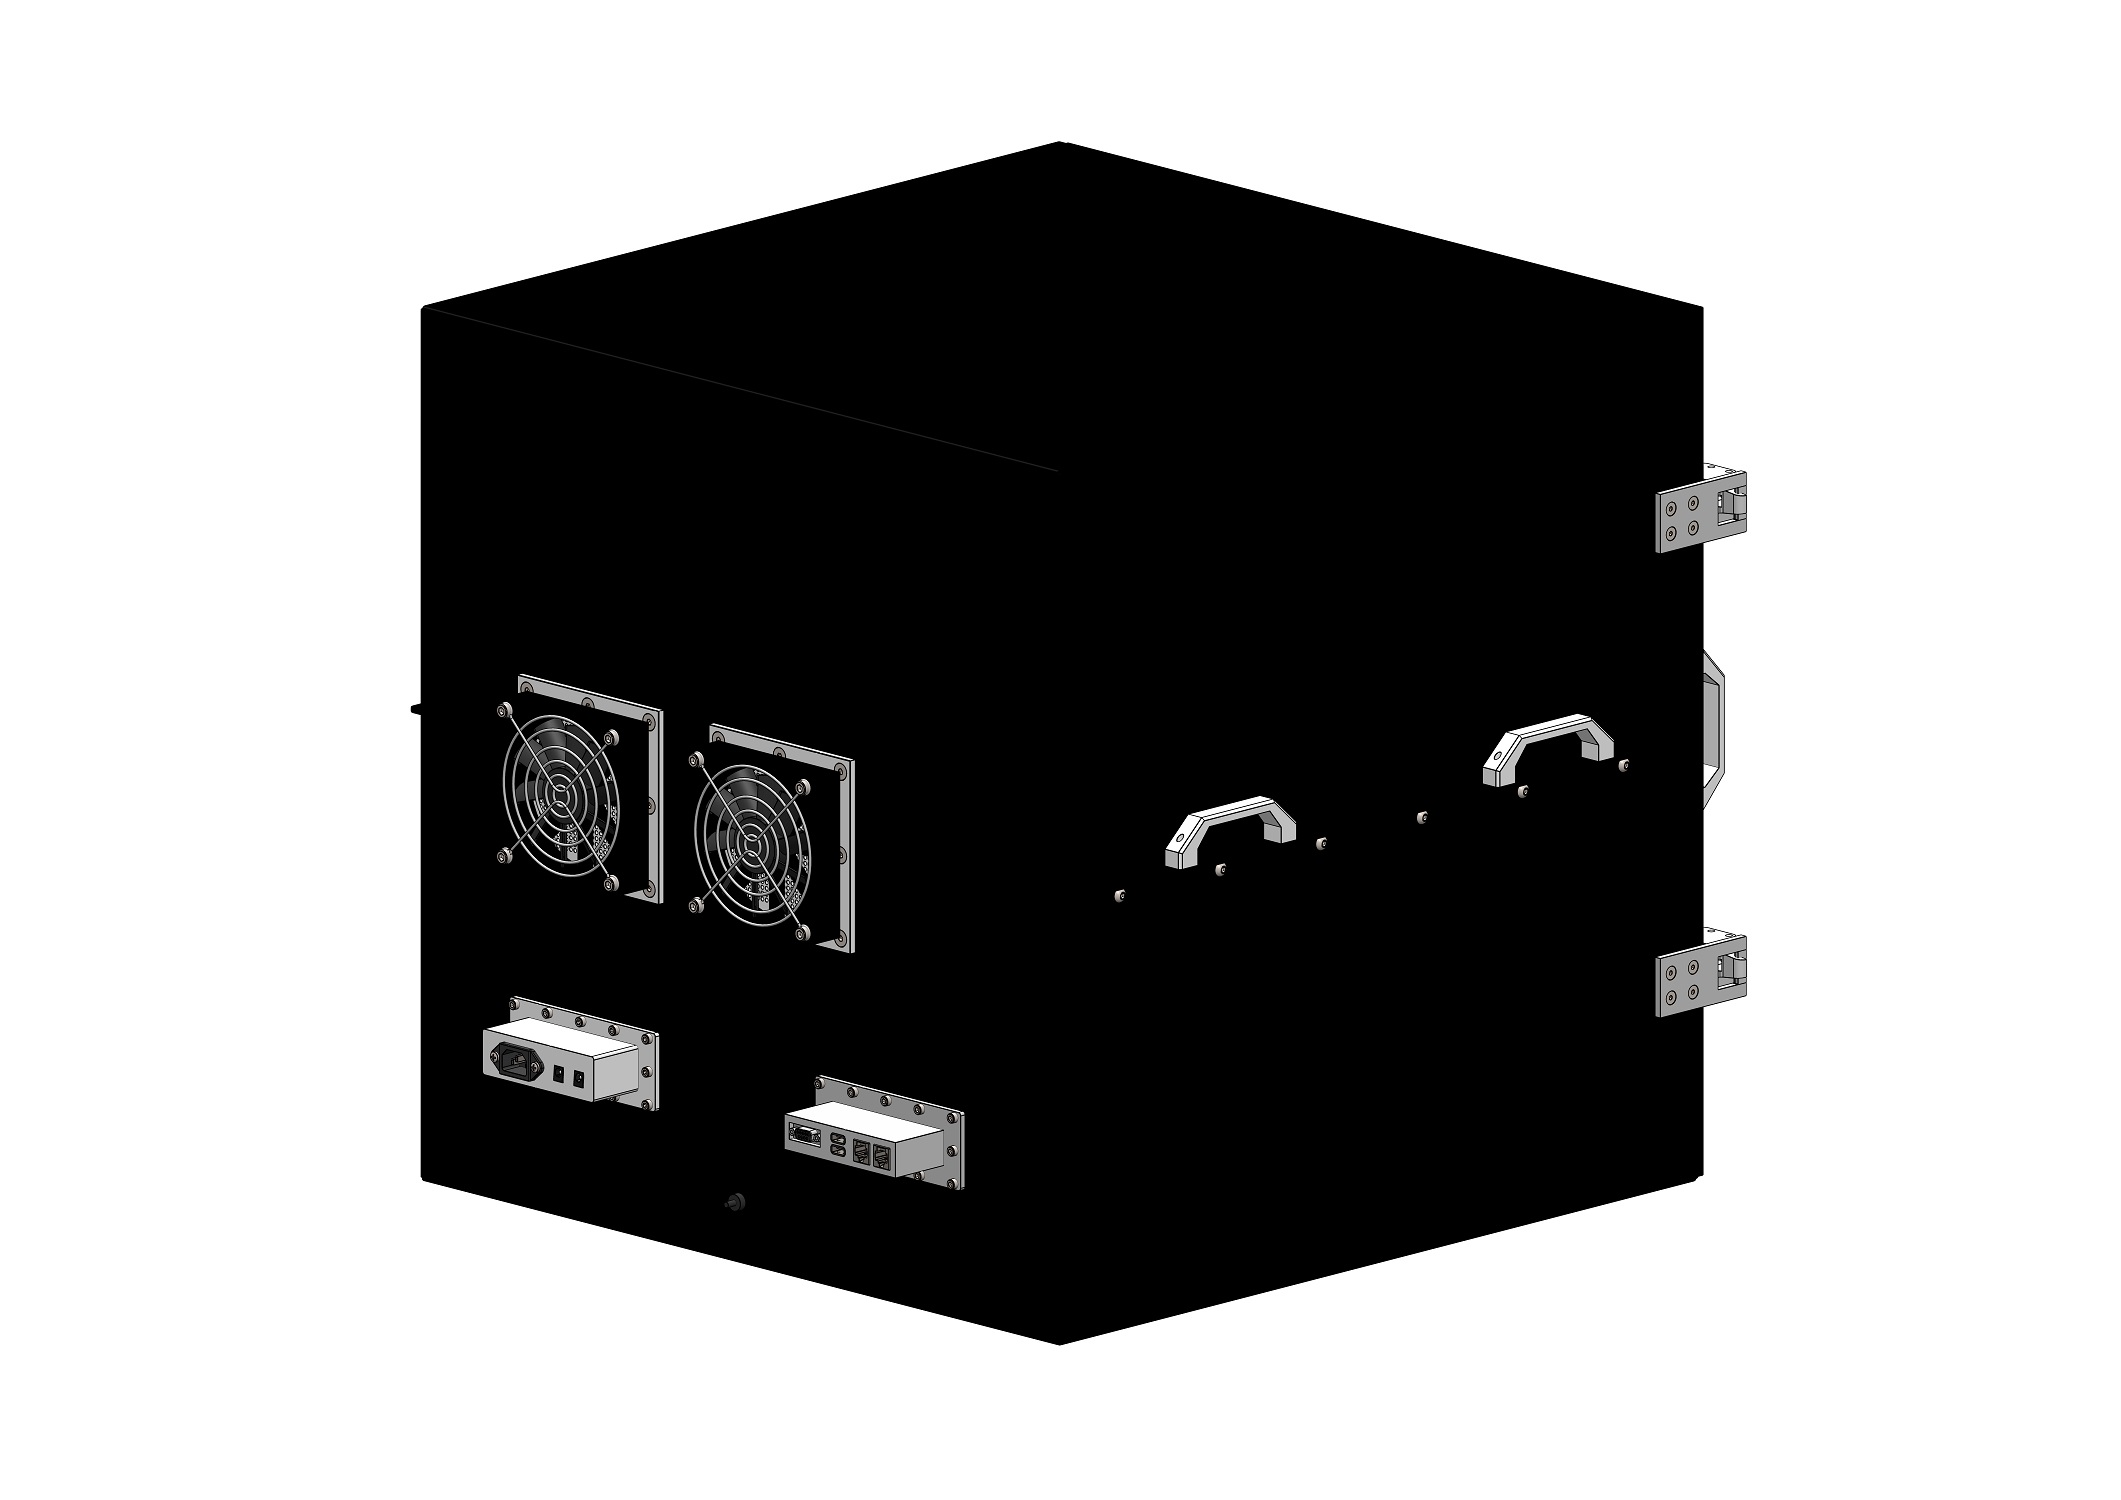 HDRF-2570-N RF Shield Test Box